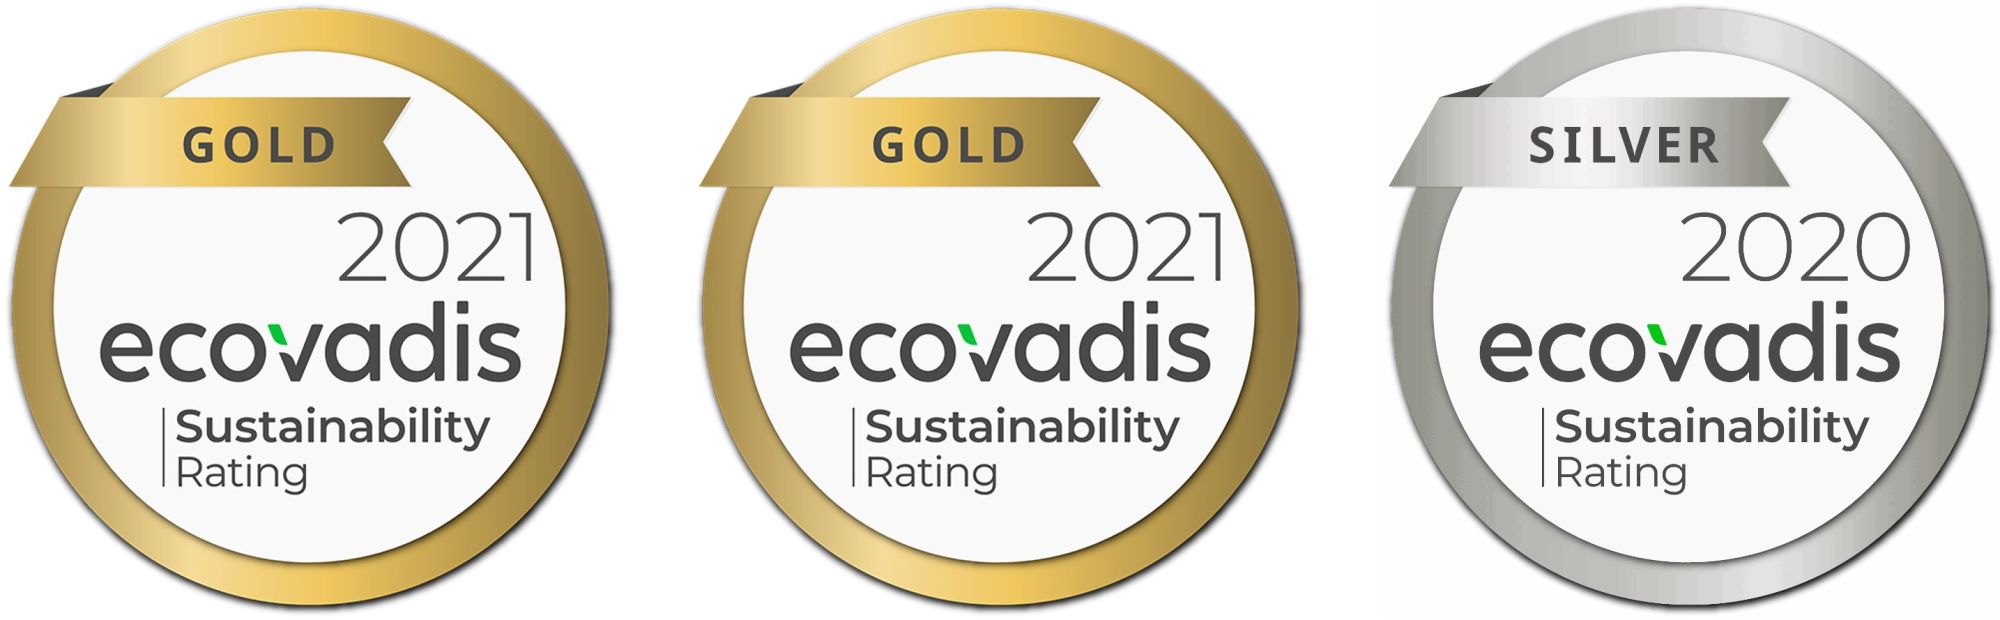 Ecovadis awards 2021